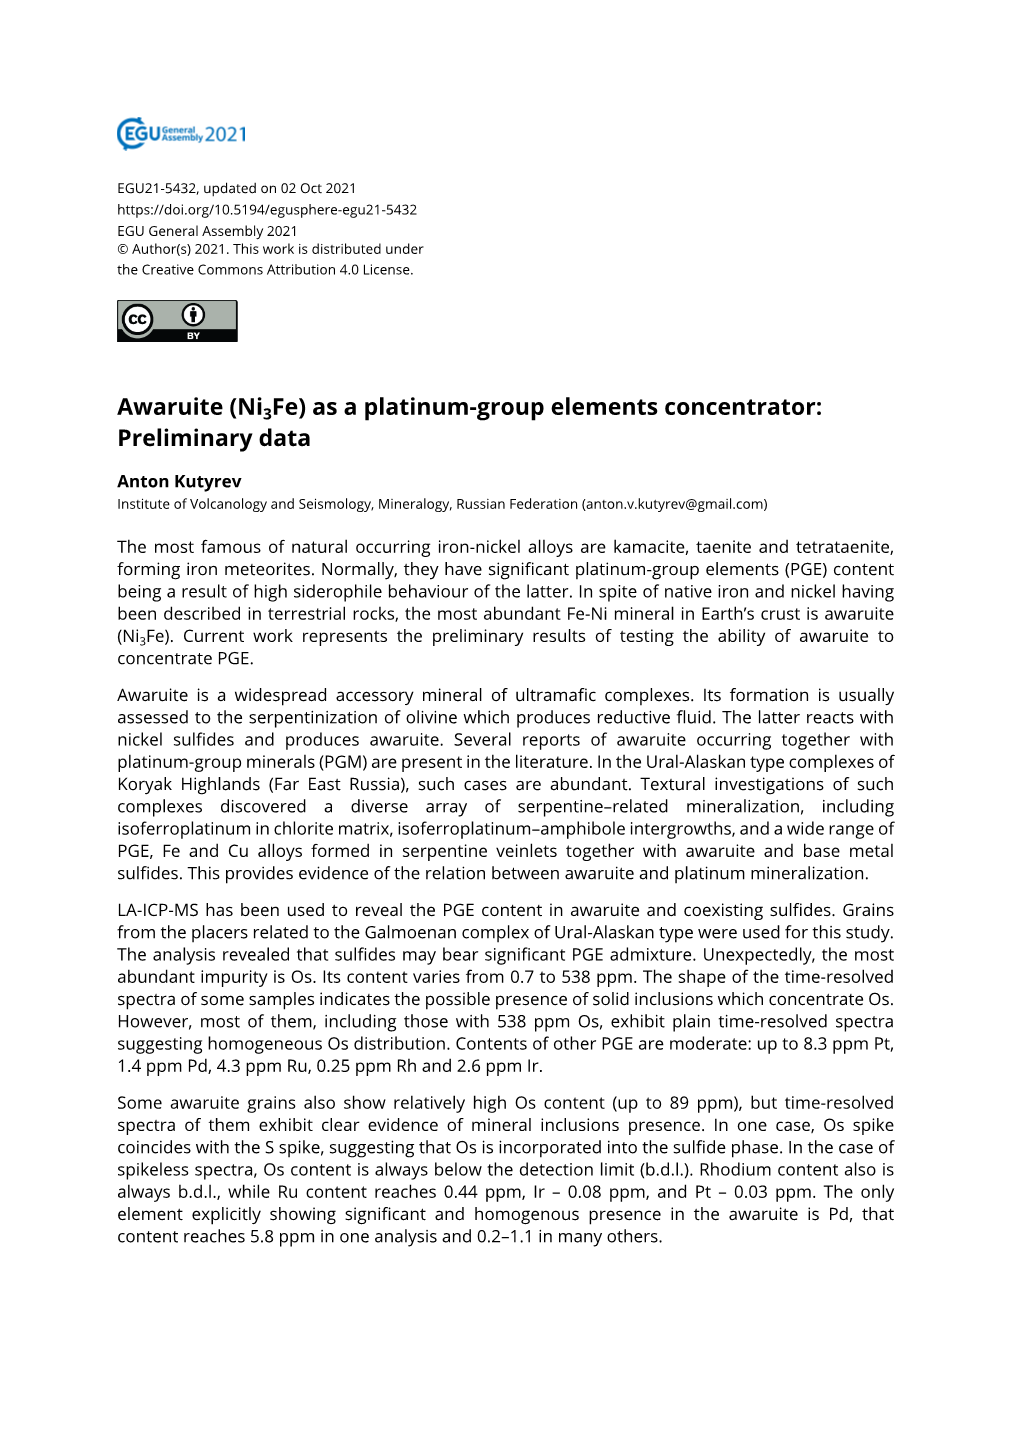 Awaruite (Ni3fe) As a Platinum-Group Elements Concentrator: Preliminary Data